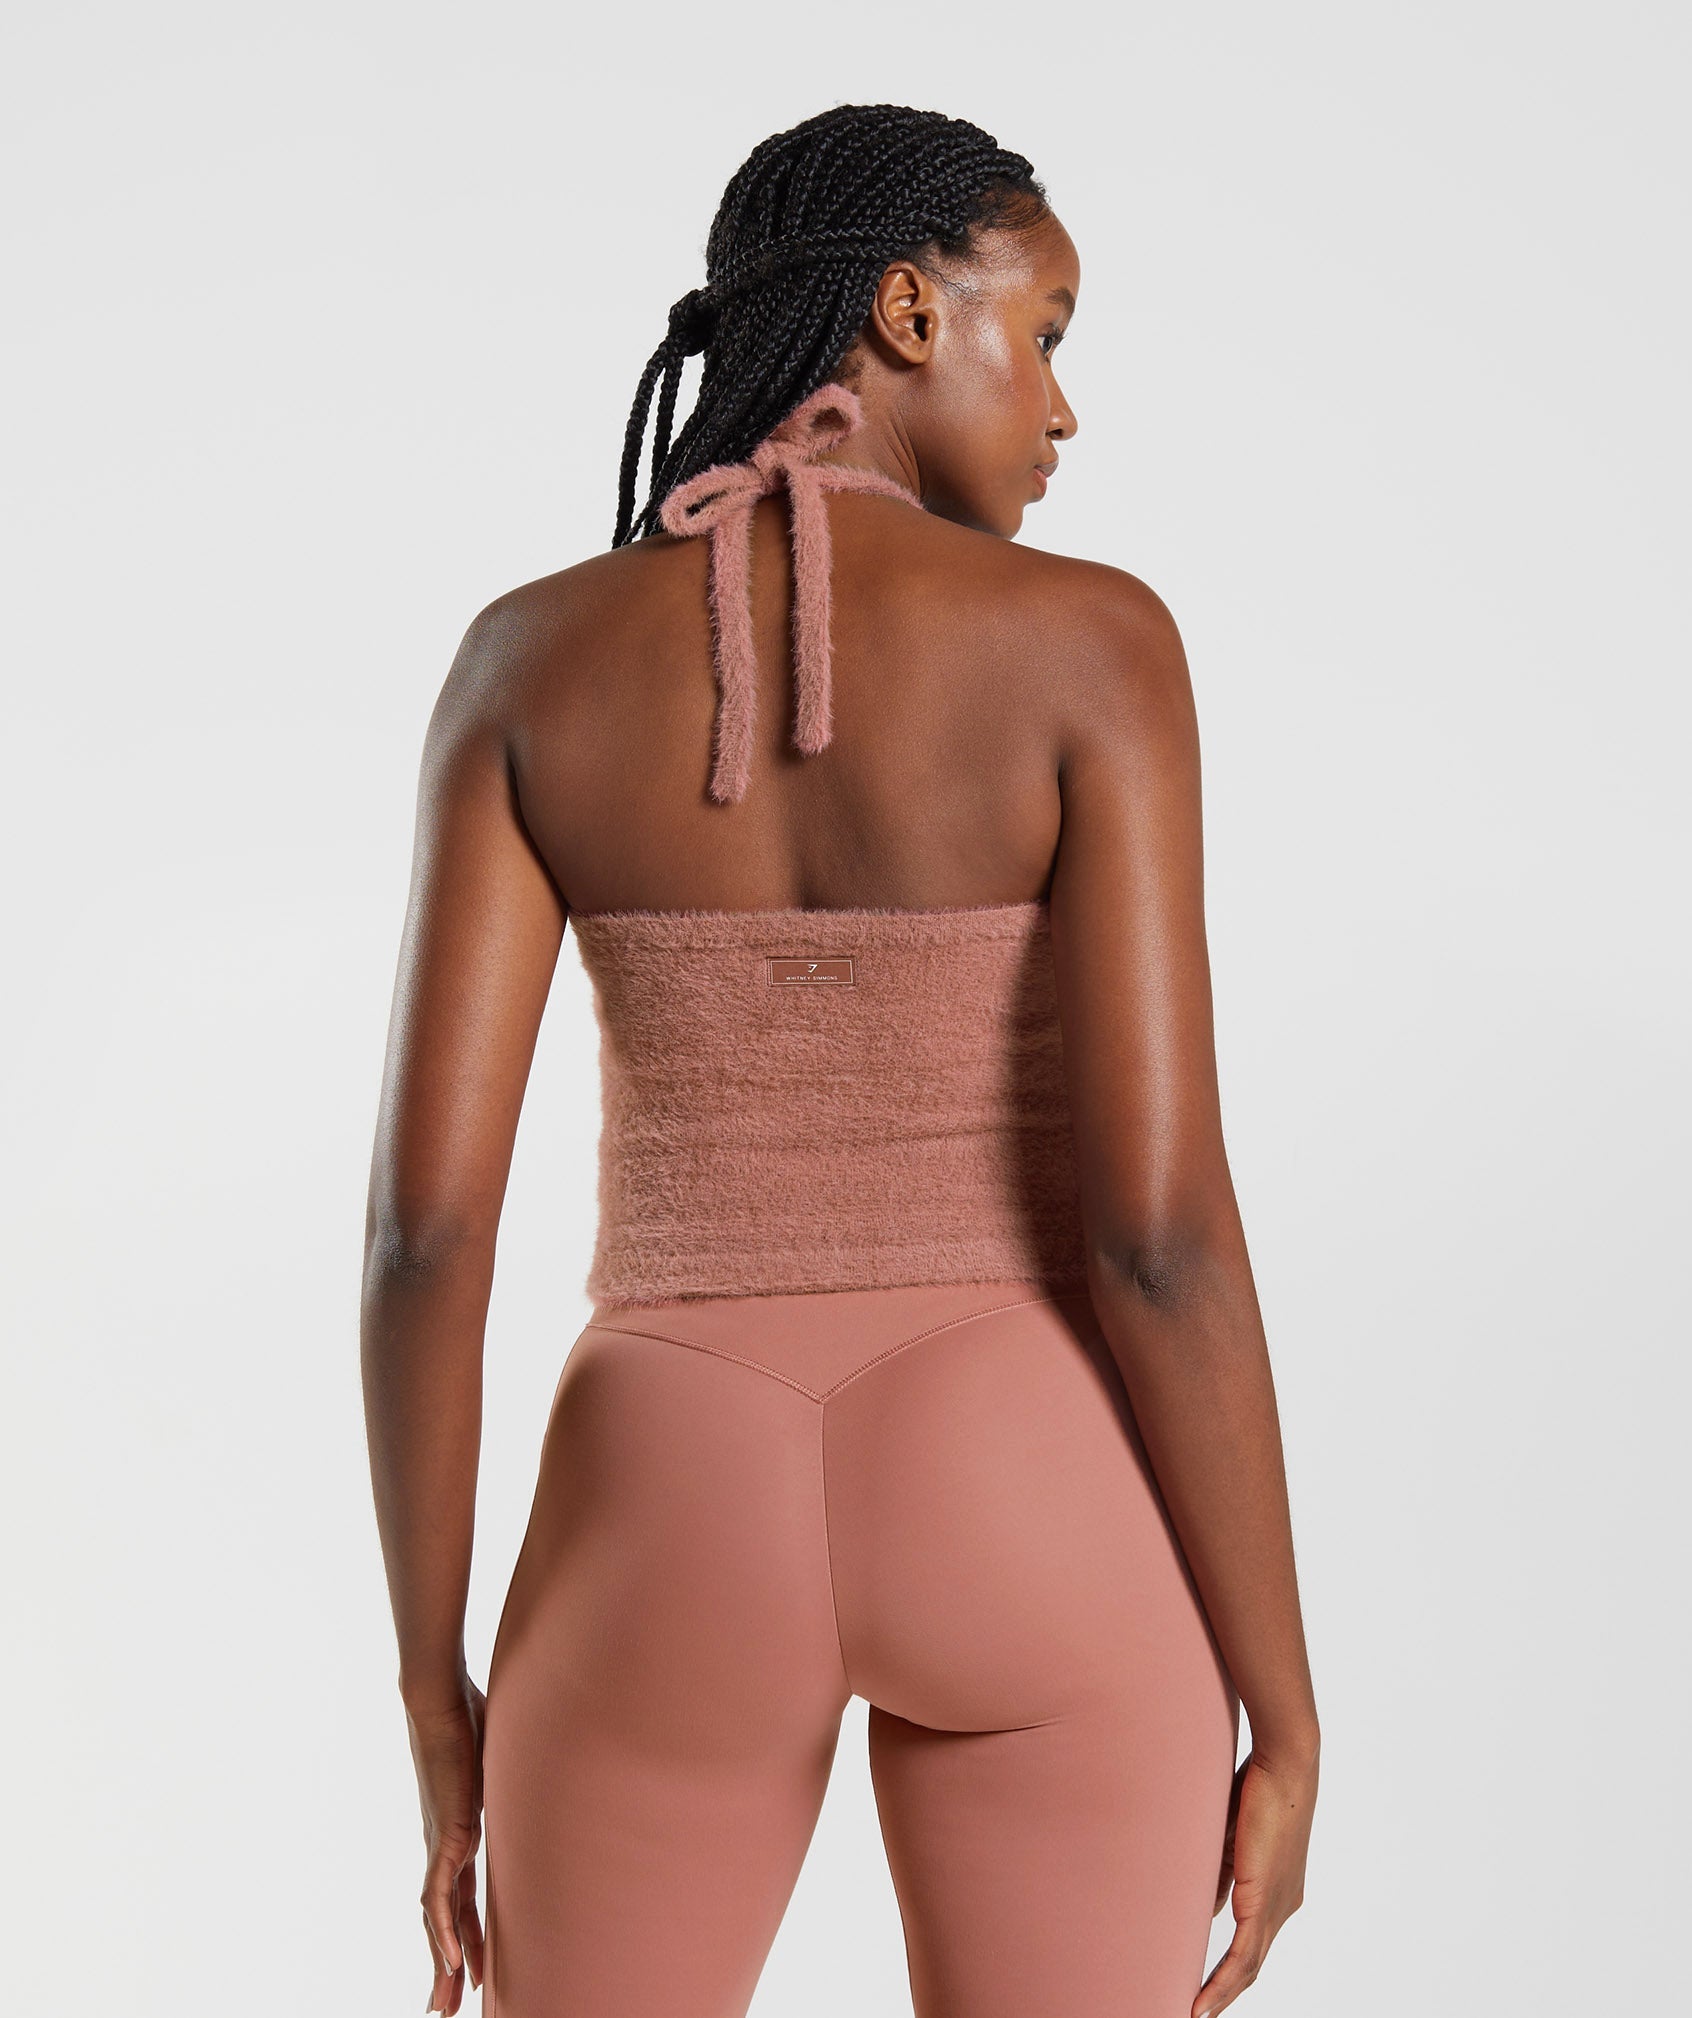 Buy TomTiger Women's Yoga Pants 7/8 High Waisted Workout Yoga